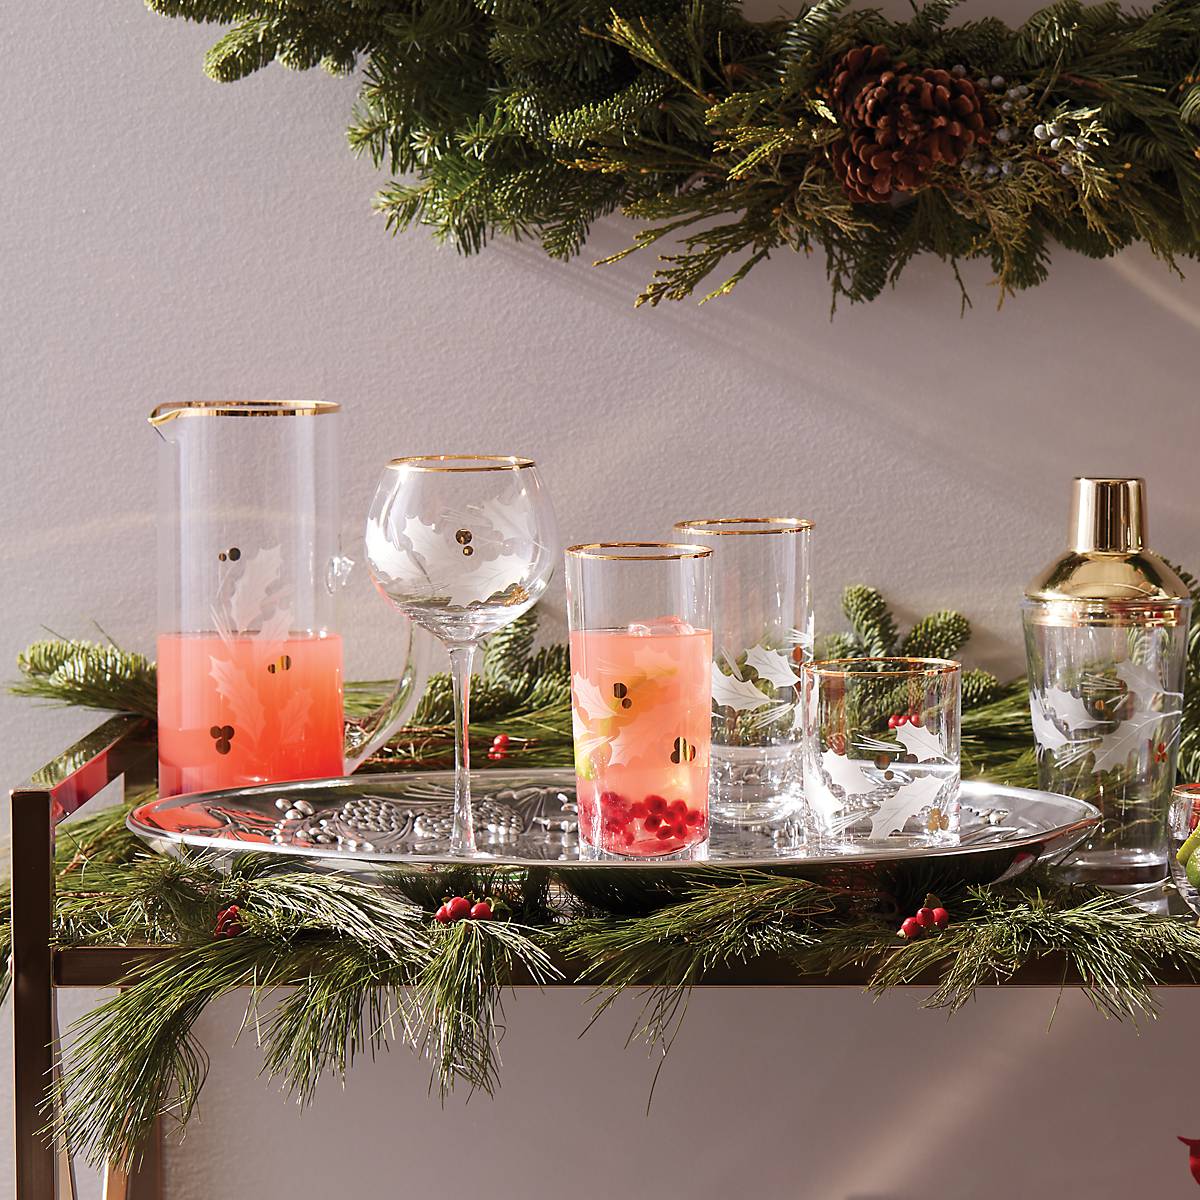 4-Piece Christmas Tree Glass Hiball Drinkware Set